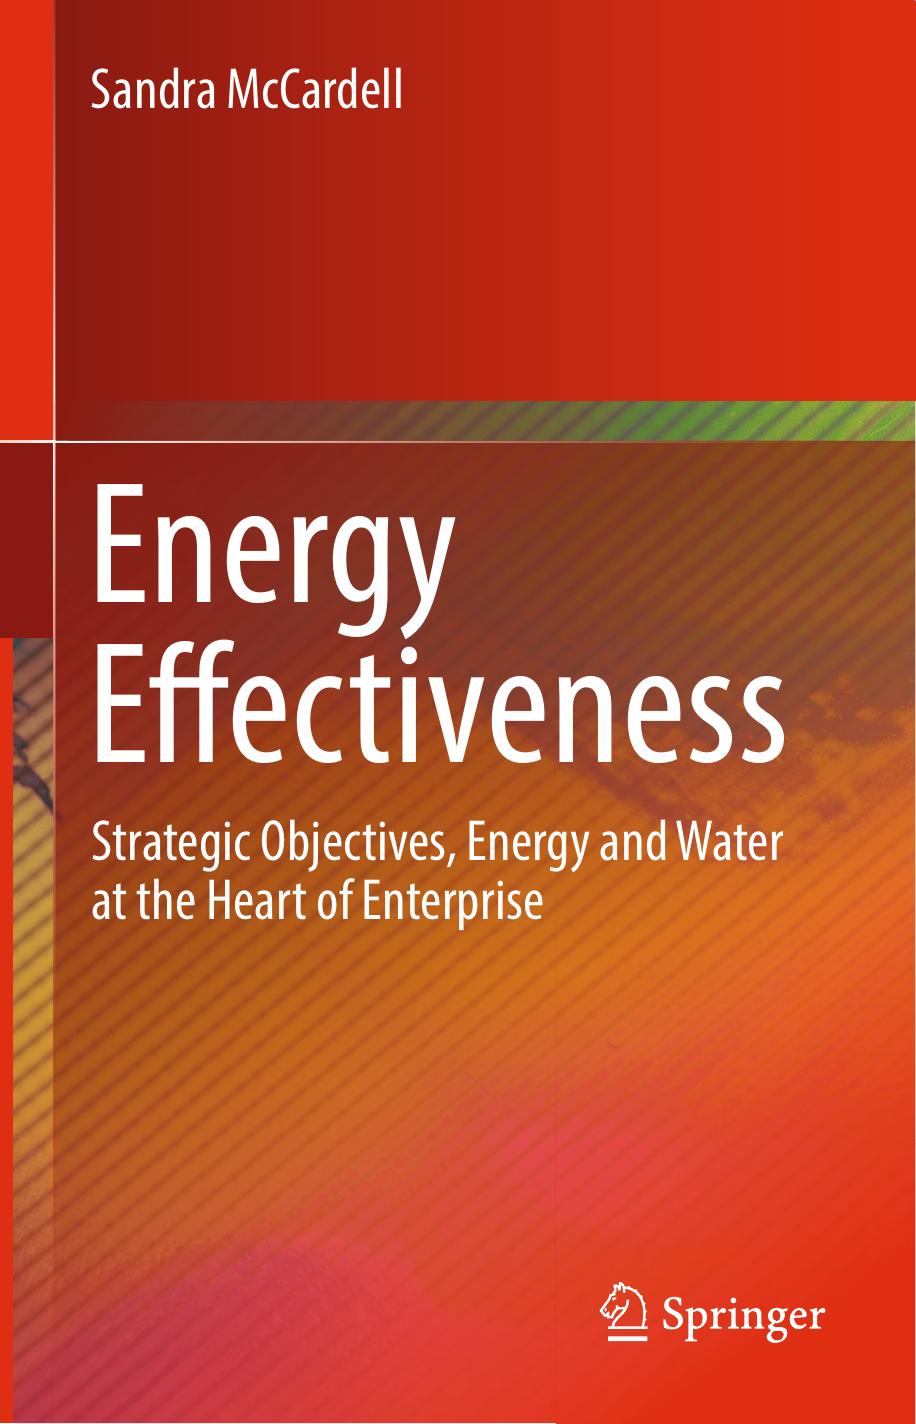 Energy Effectiveness by Sandra McCardell